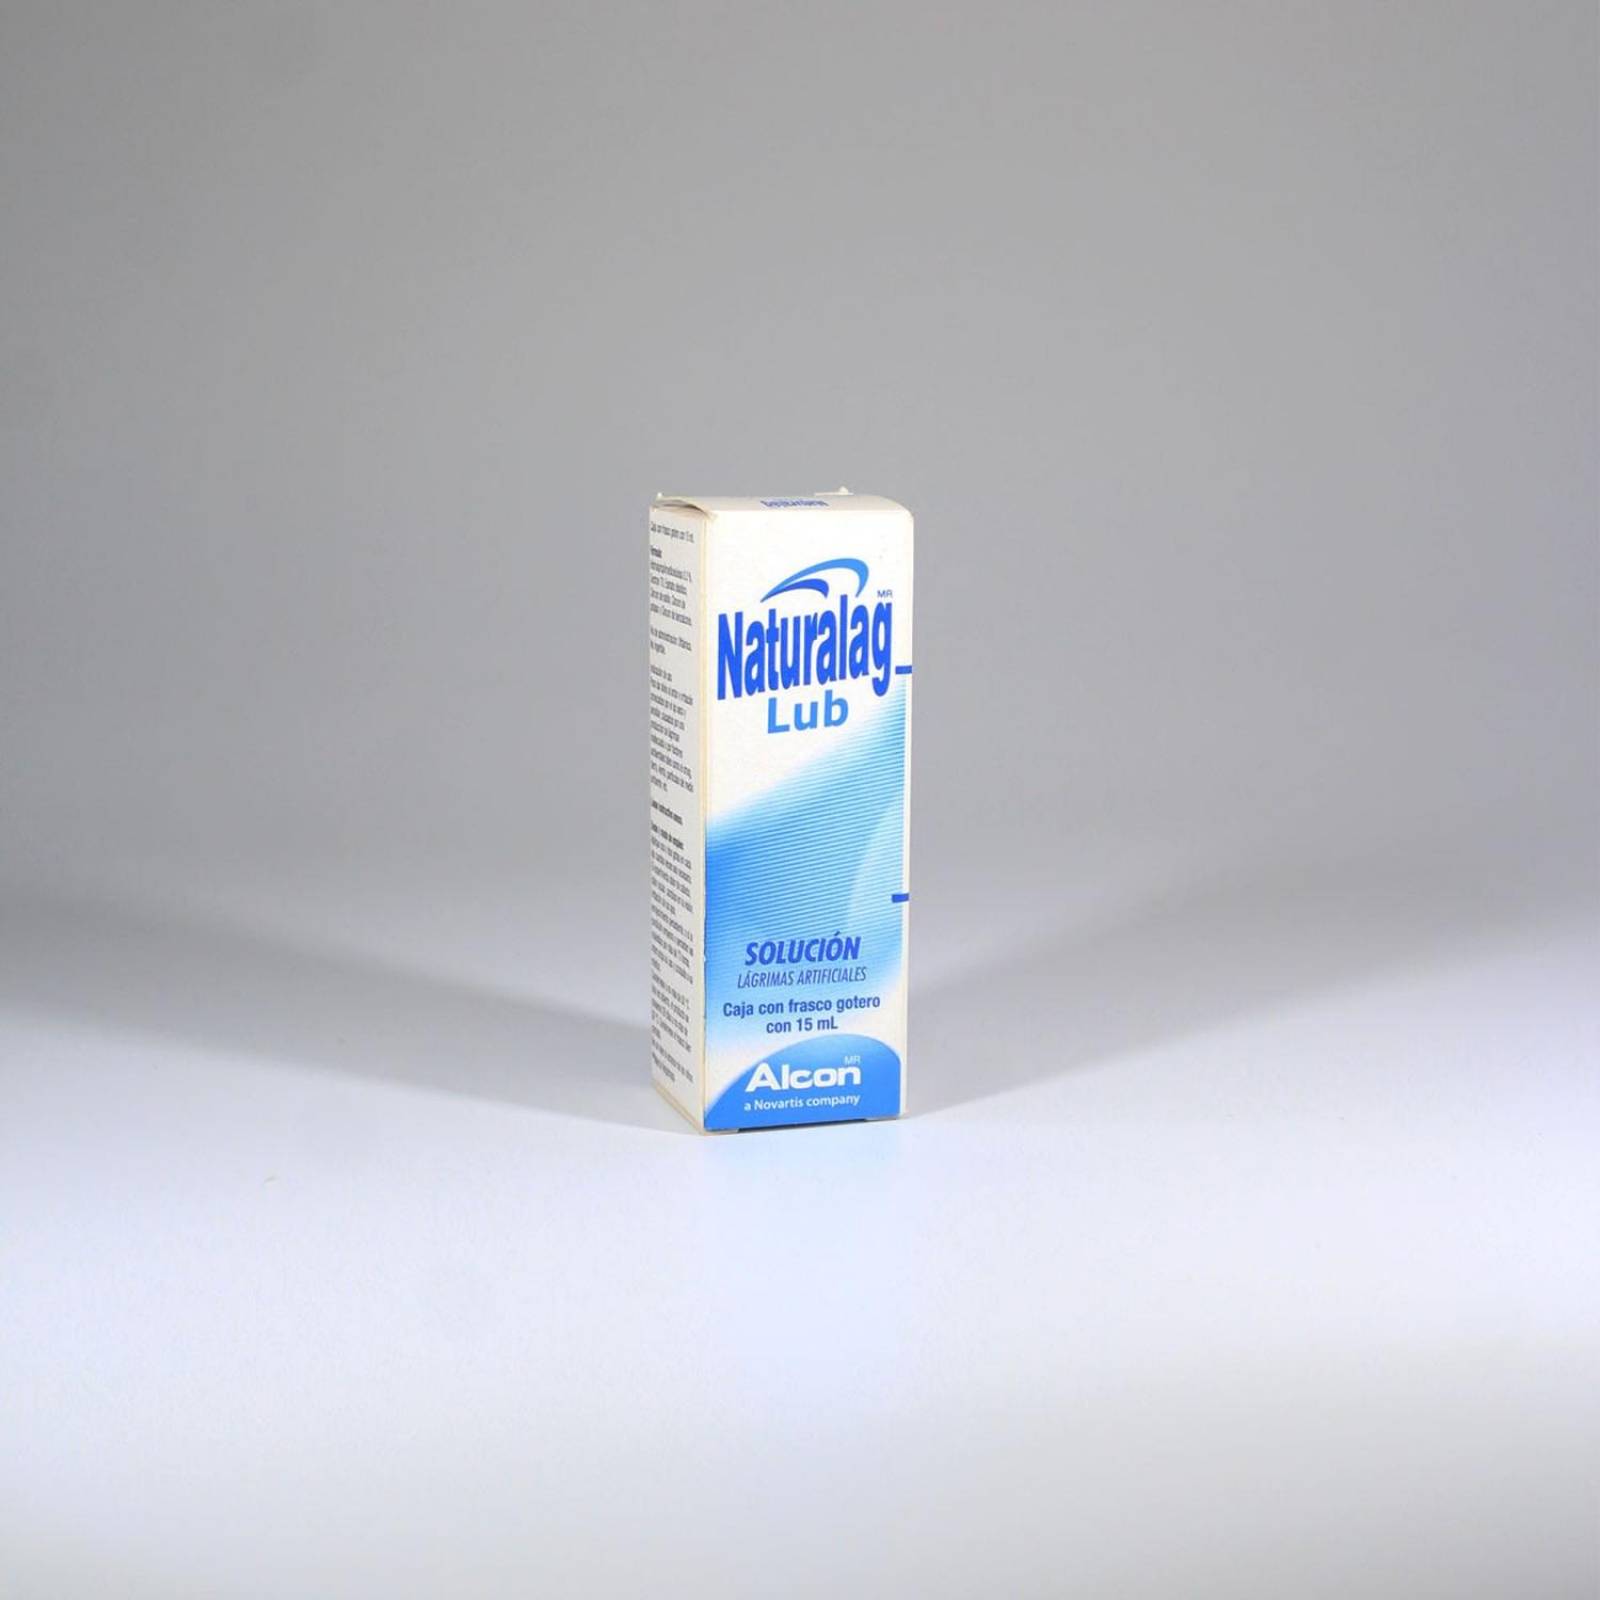 Alcon naturalag lub ungüento lágrima artificial (3.5 g), Delivery Near You